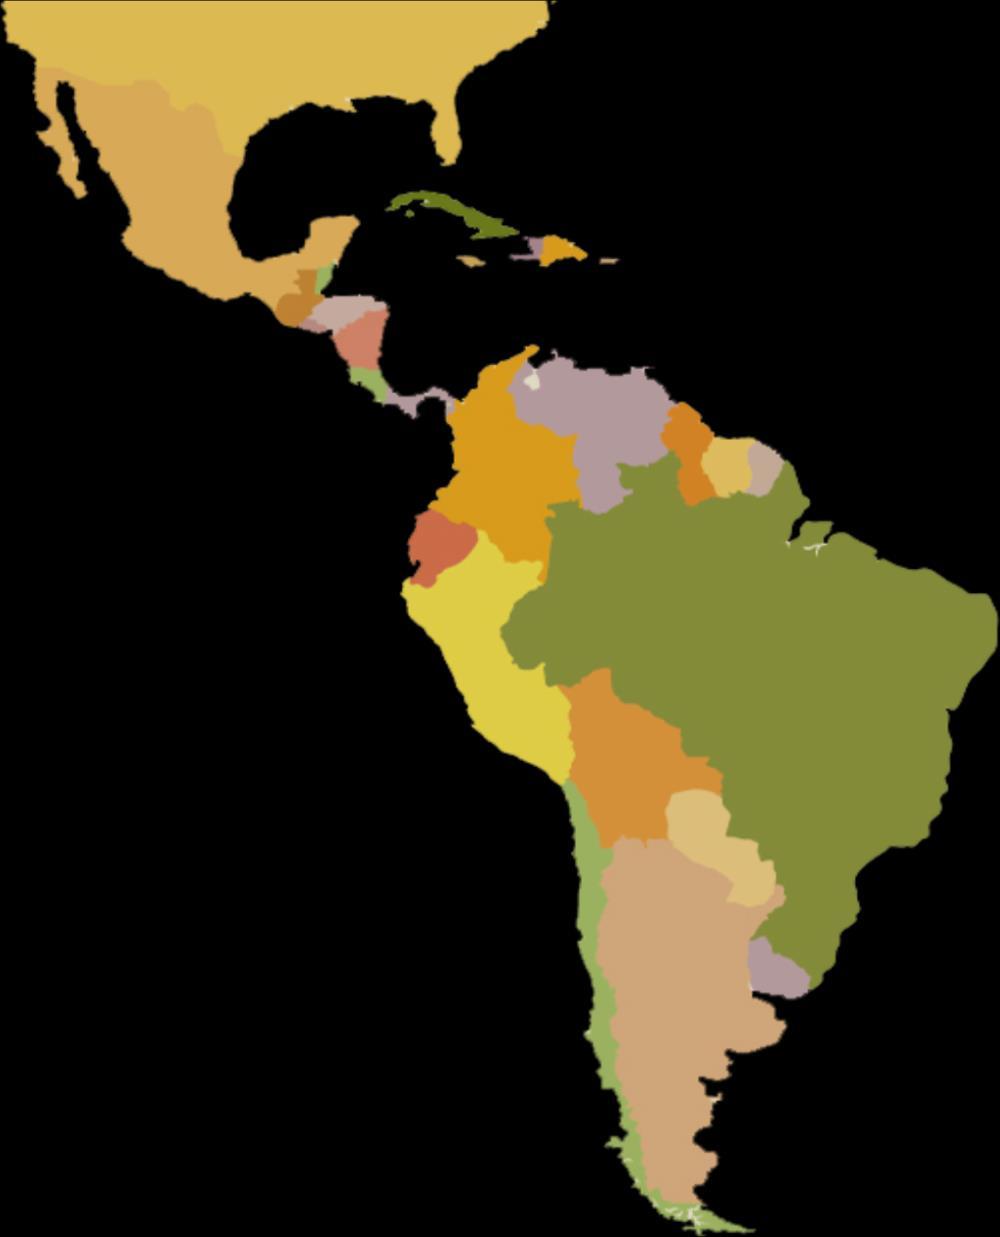 Población de Latinoamérica / Crecimiento proyectado 2010-2030